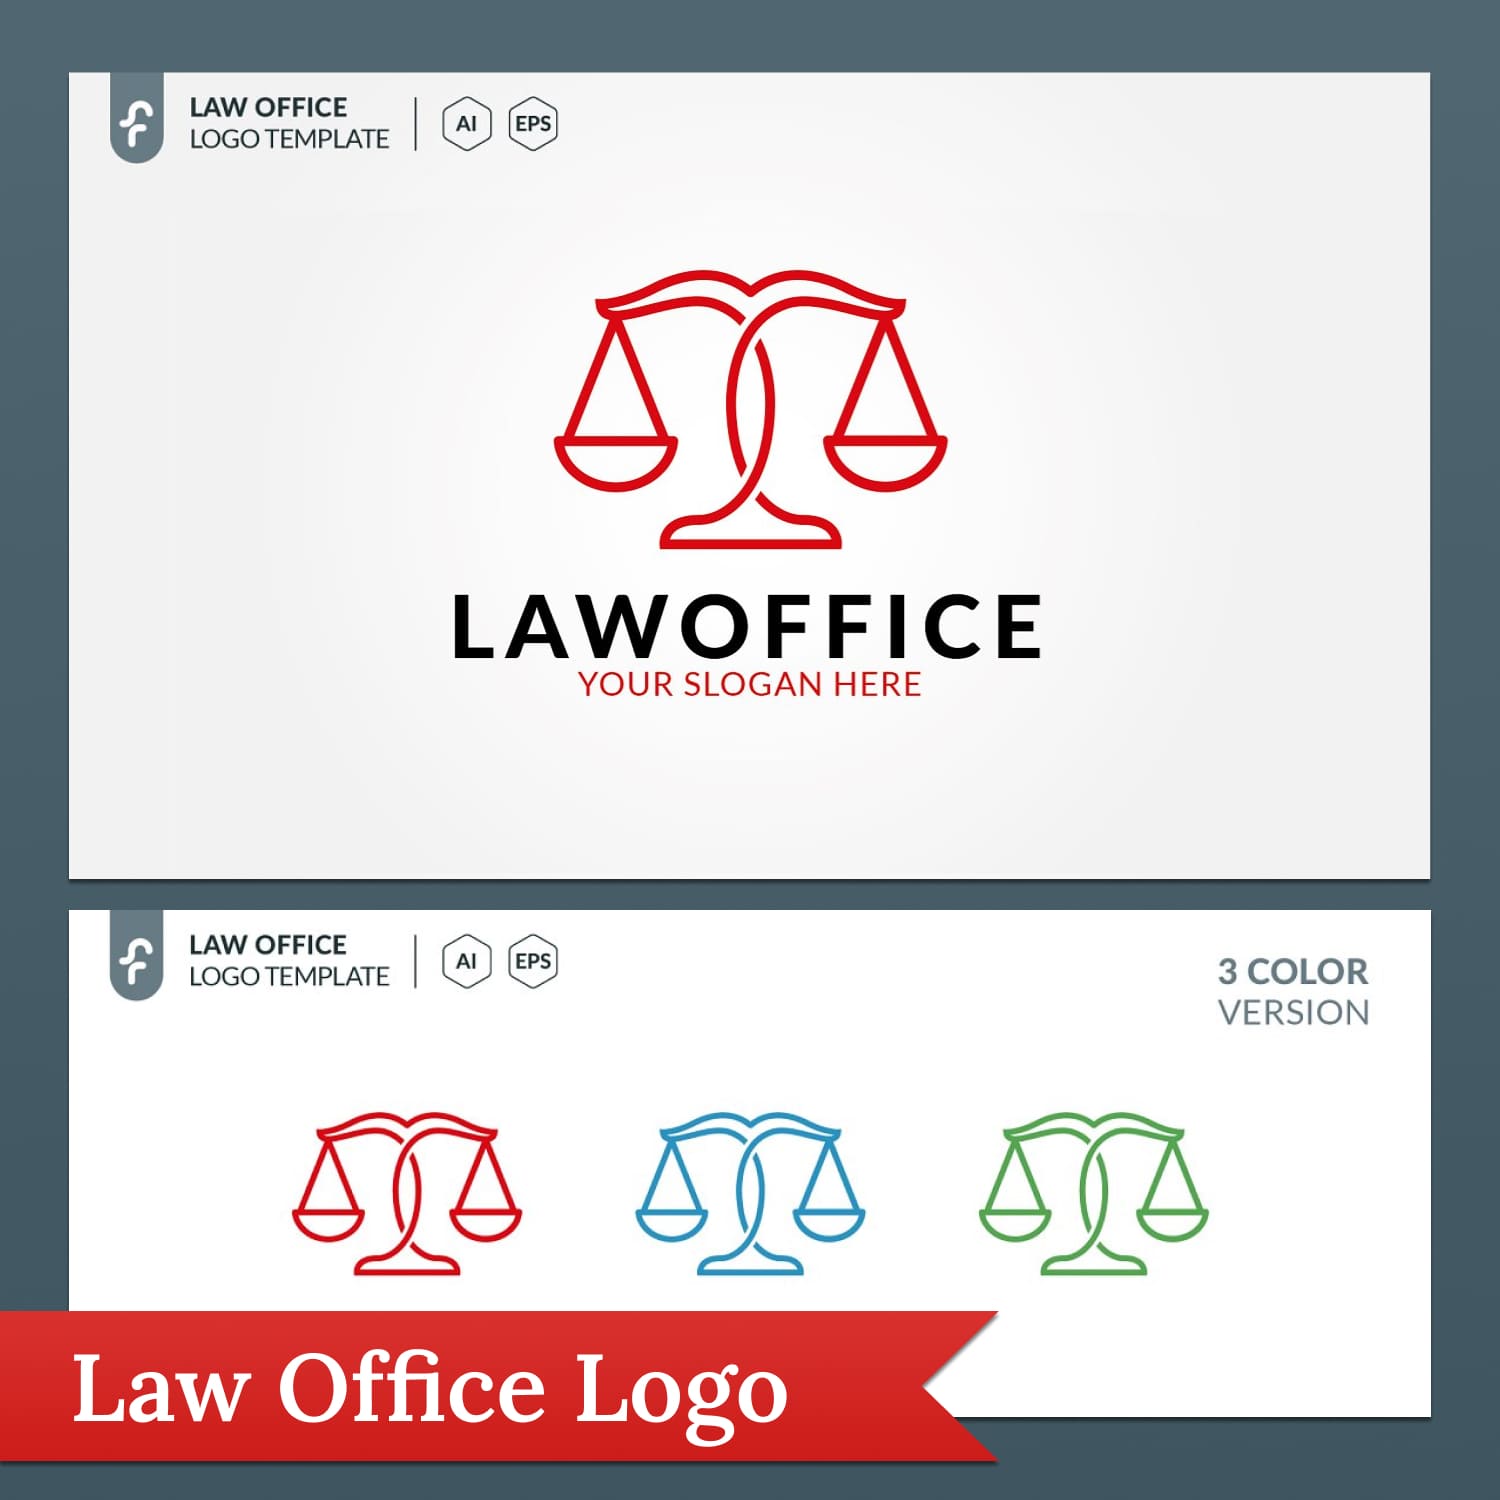 Minimalist Law Office Logo Design cover image.